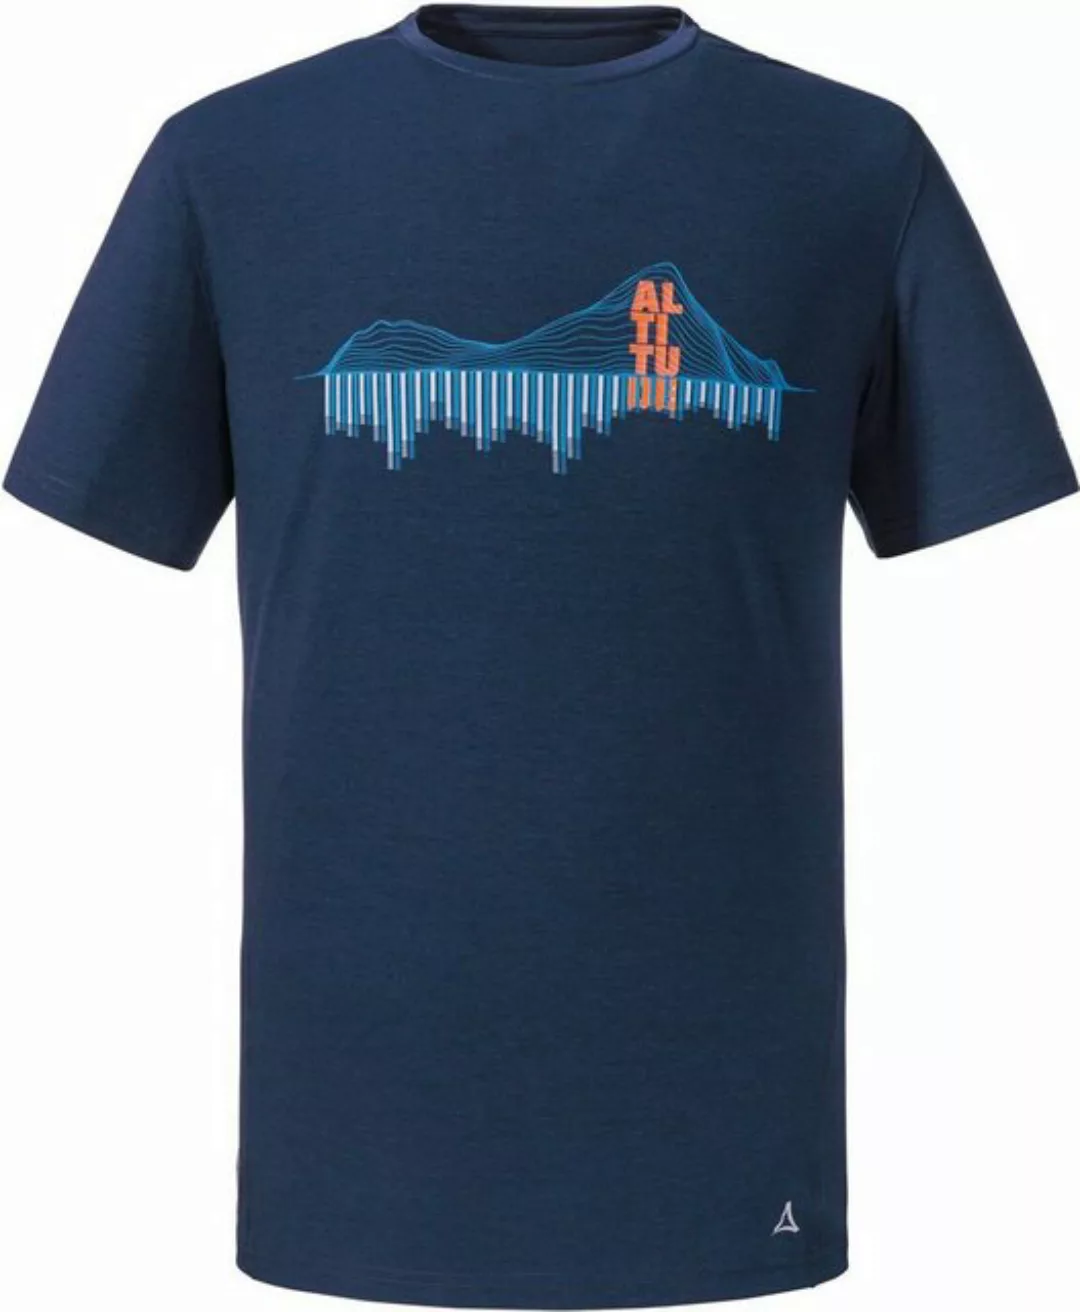 Schöffel T-Shirt T Shirt Tannberg M 8180 dress blues günstig online kaufen